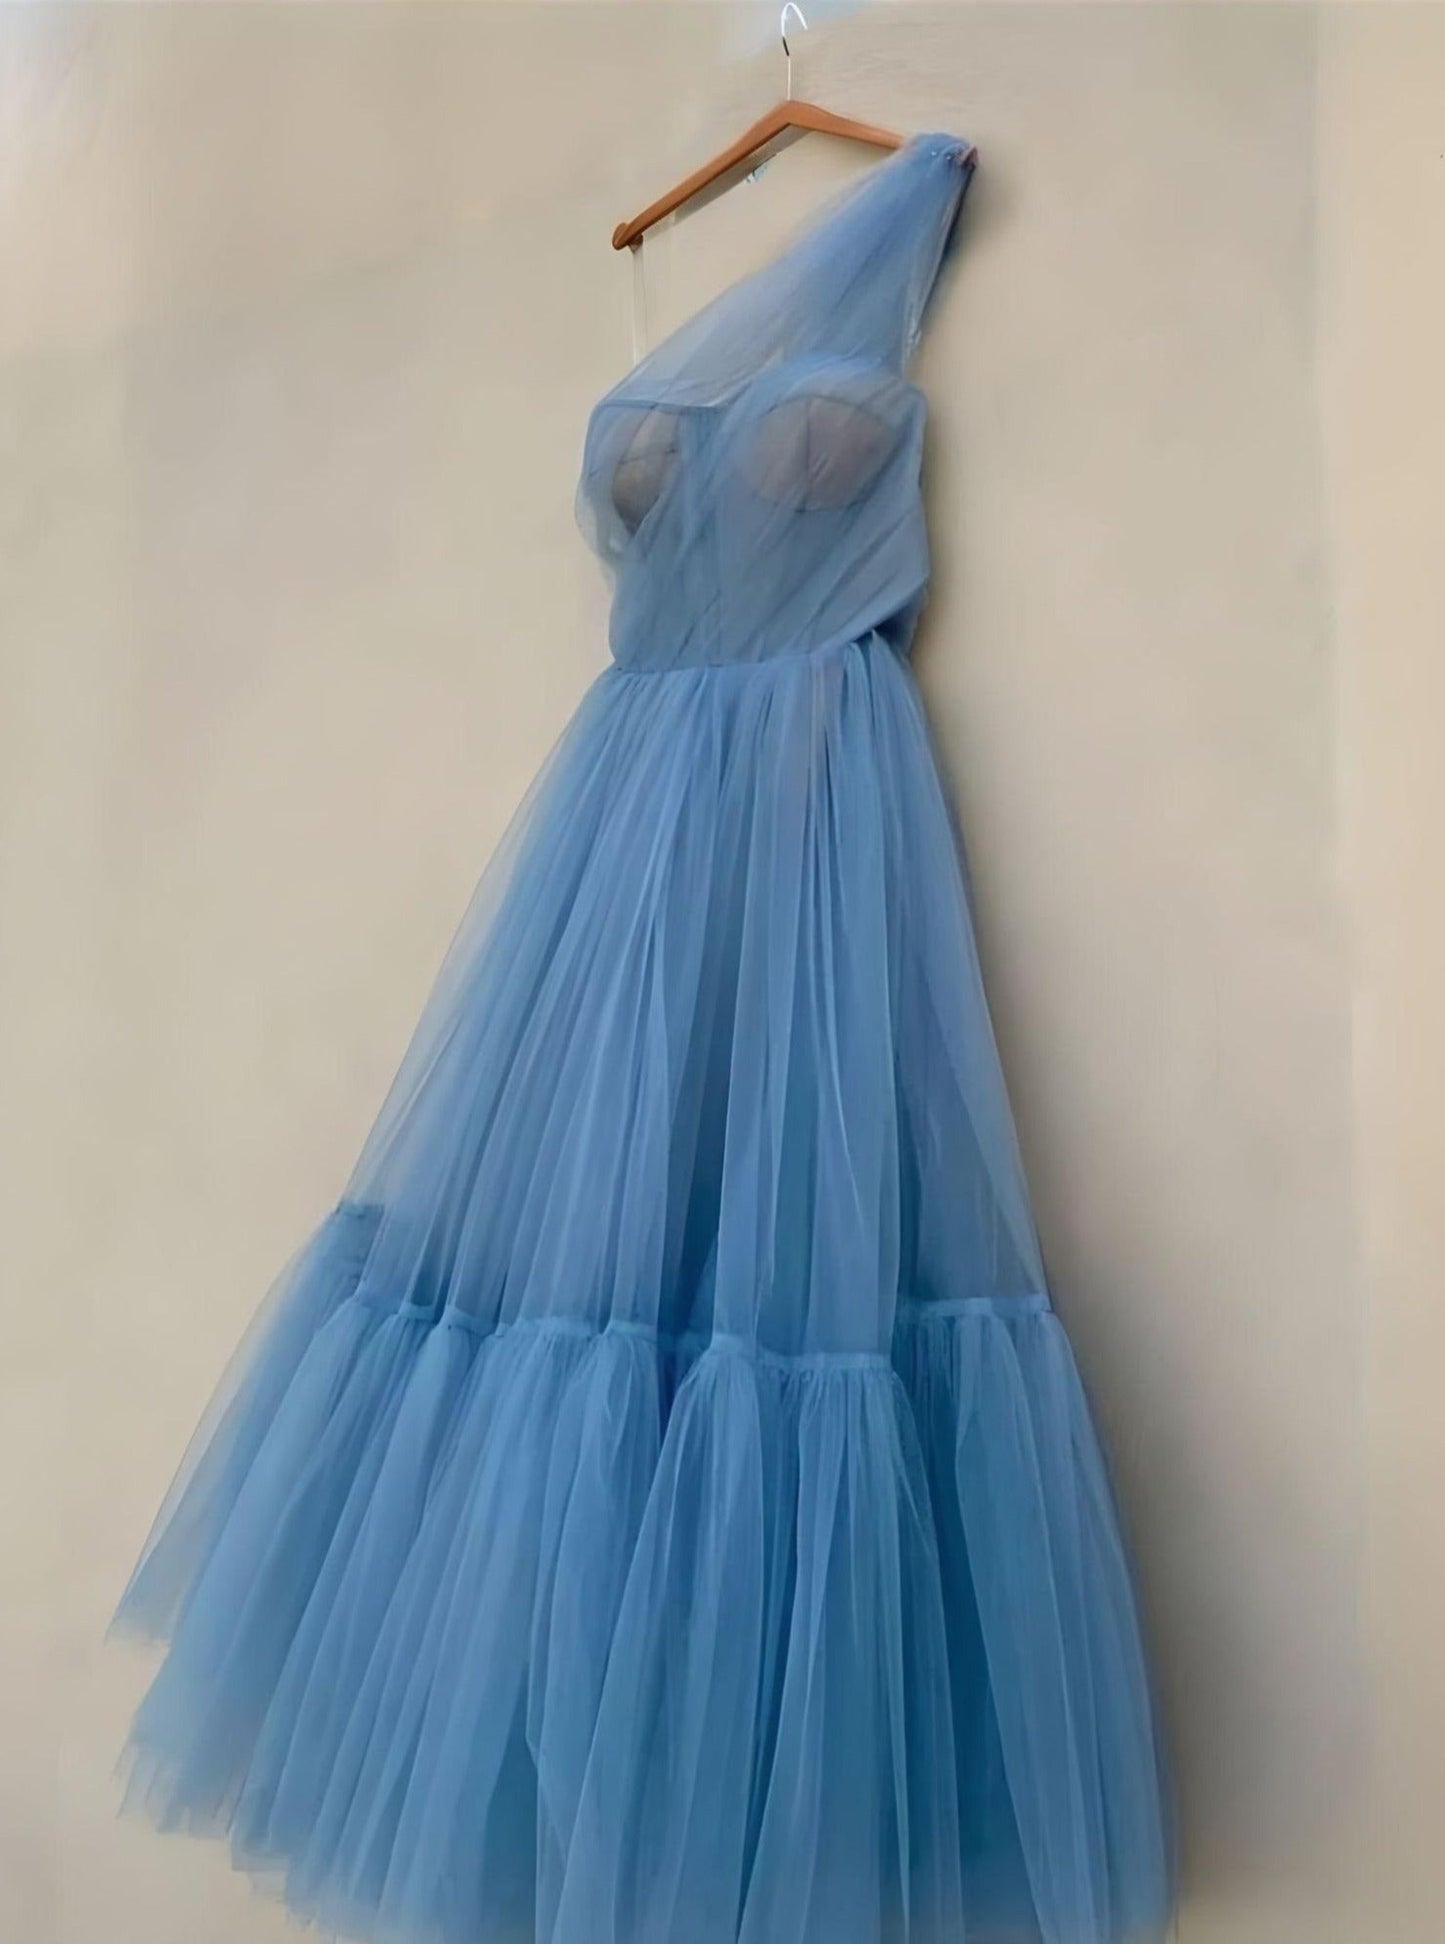 SKYLAR Formal Couture Dress